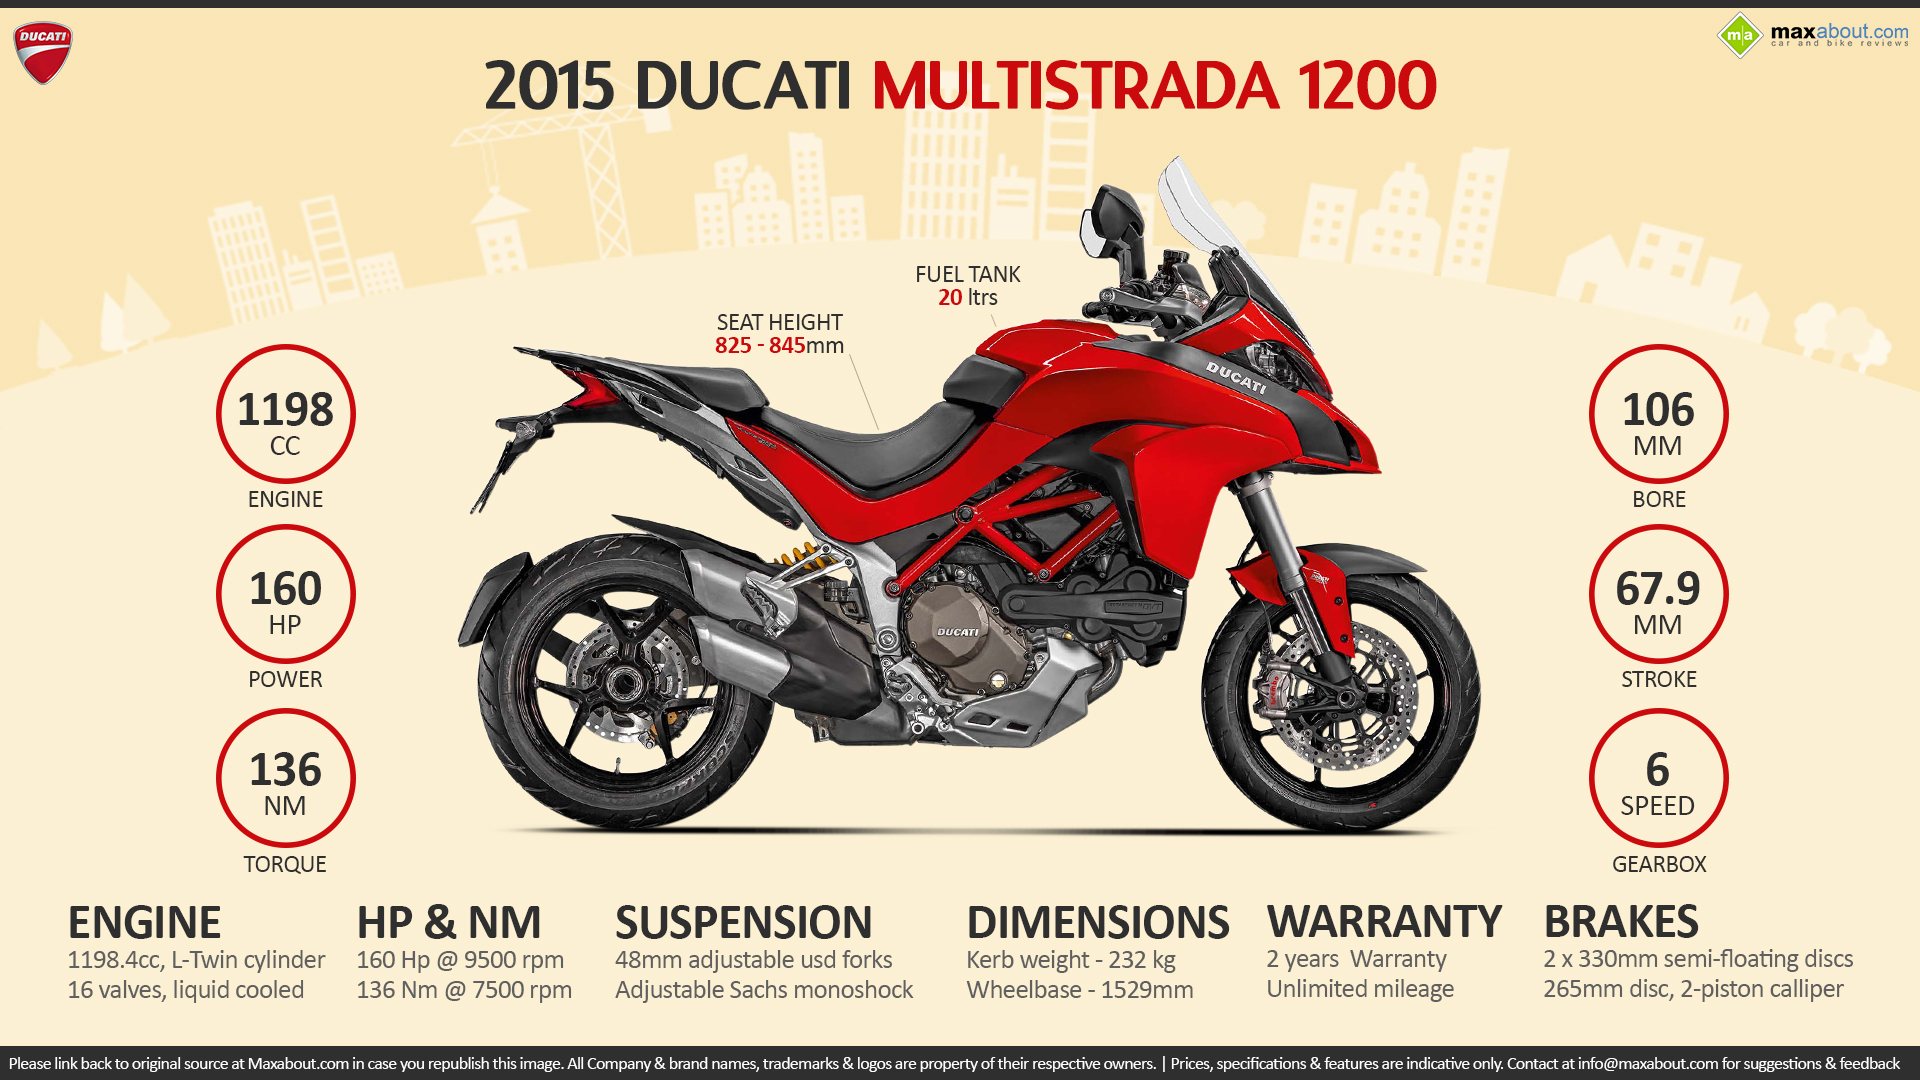 Honda высота по седлу. Ducati Multistrada 2015. Дукати Мультистрада 2015. Ducati Multistrada 1200 2015. Ducati Multistrada 1200s.